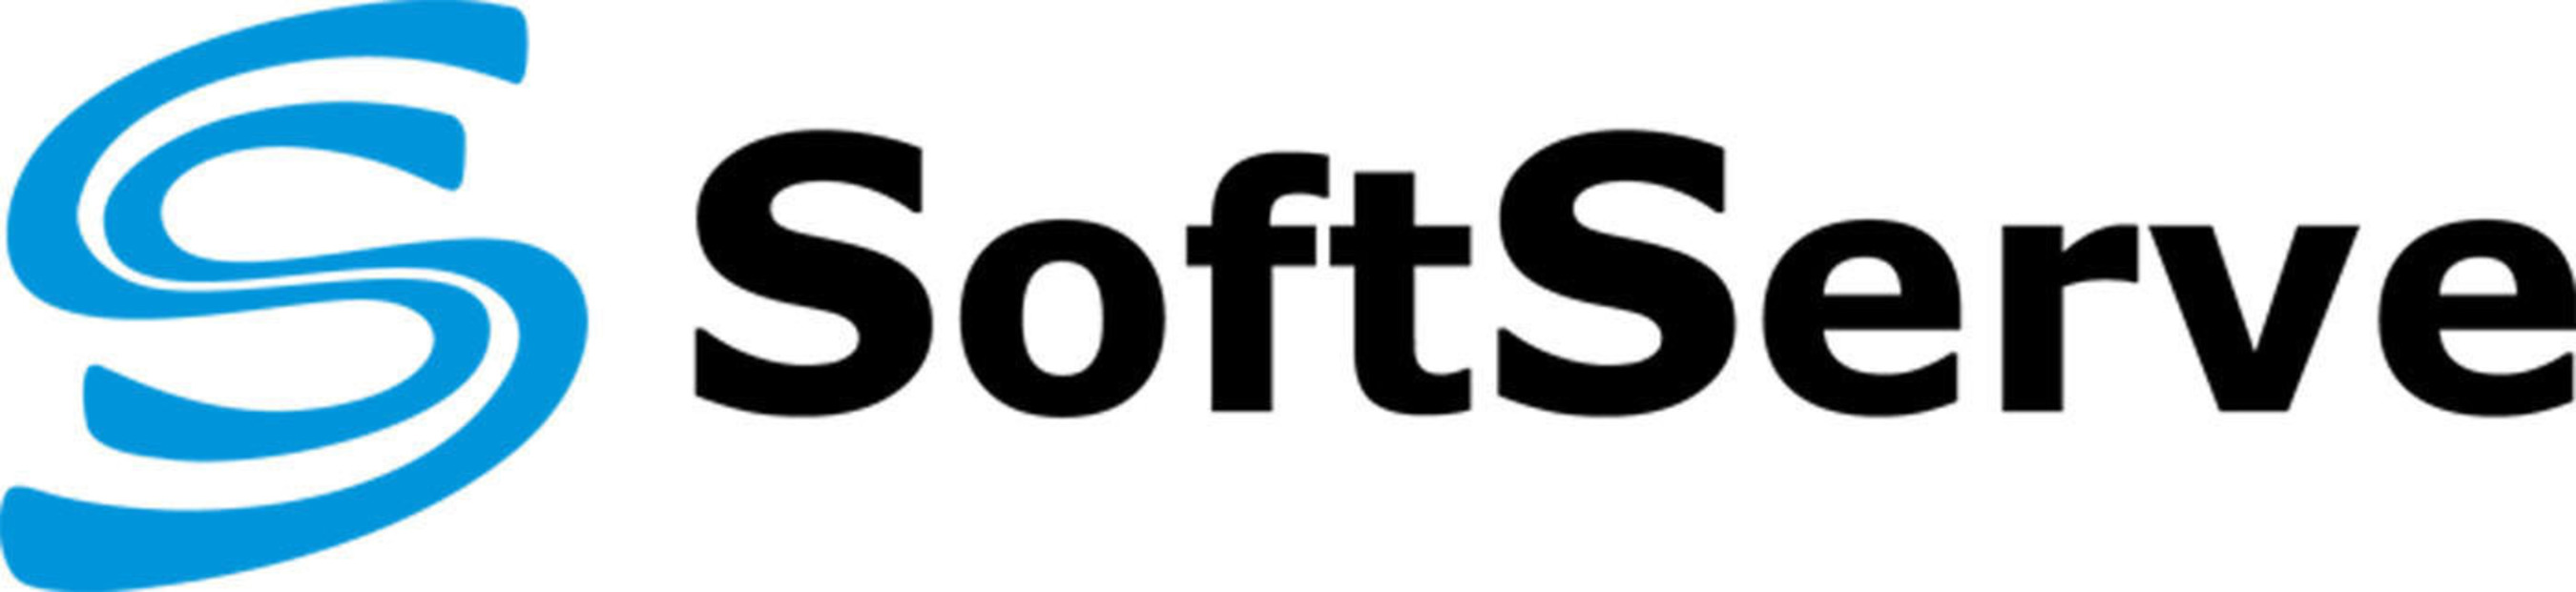 SoftServe logo.